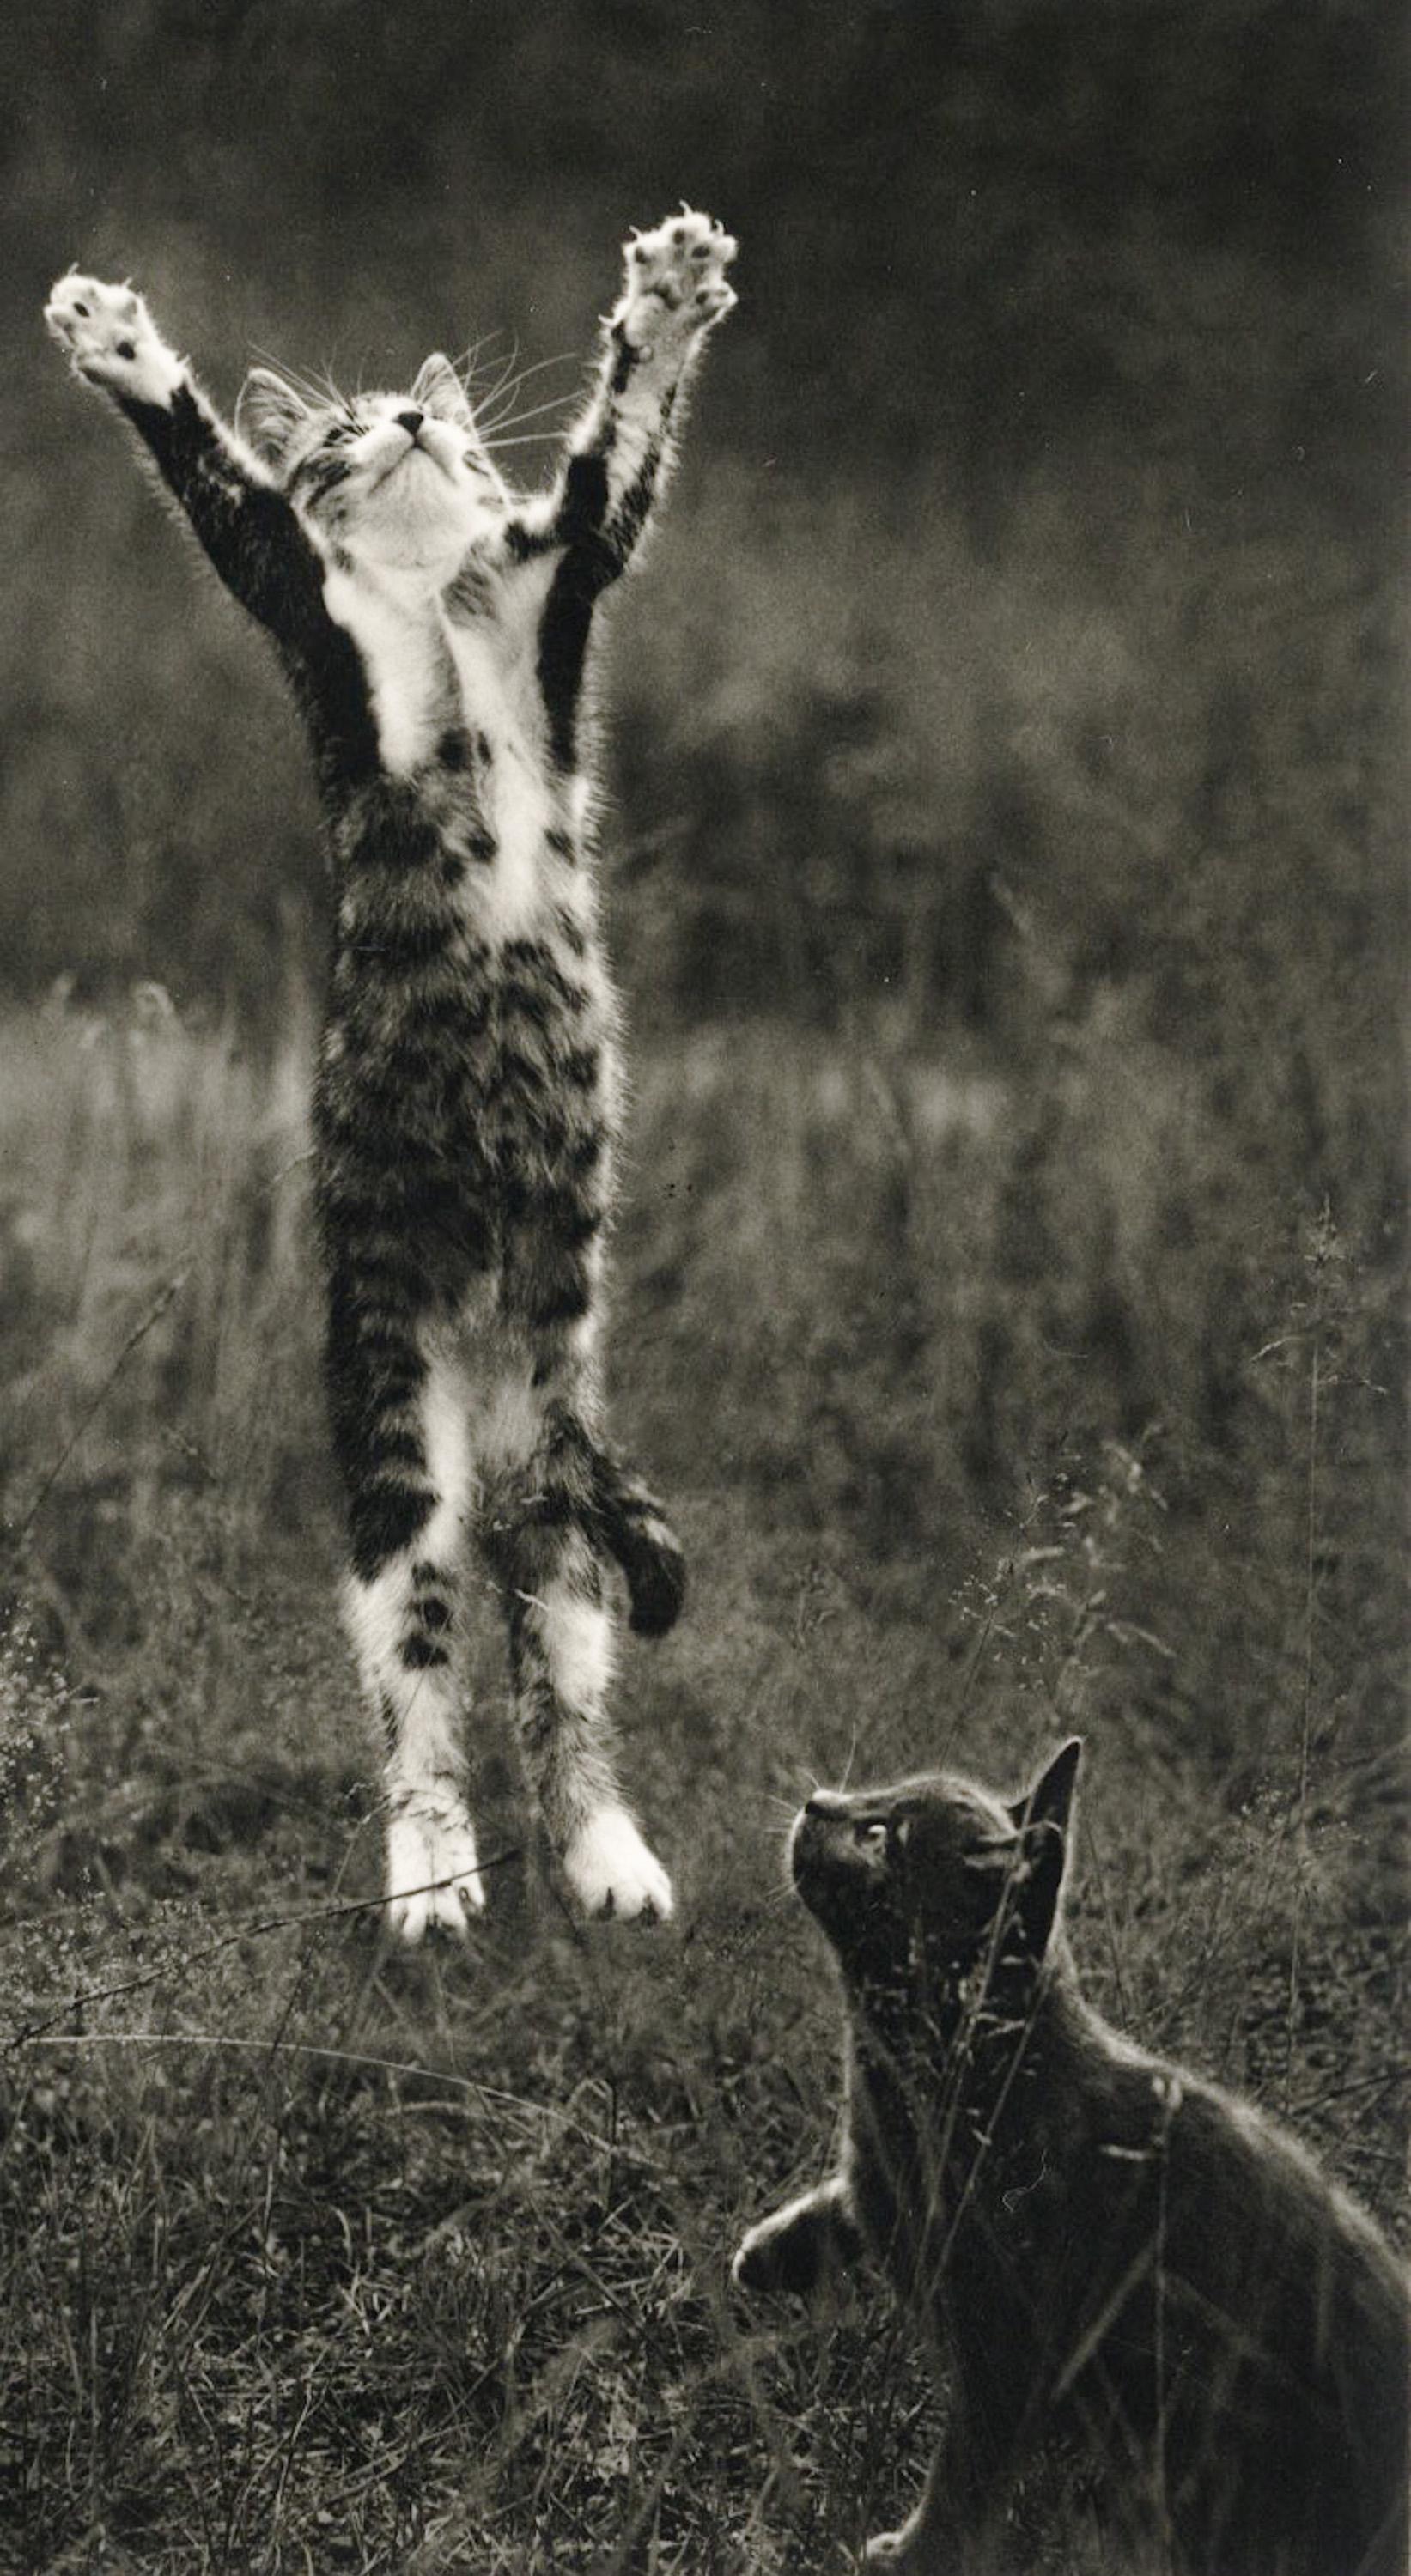 Pentti Sammallahti Black and White Photograph - Koylia, Finland (Two Kittens Playing in a Field)